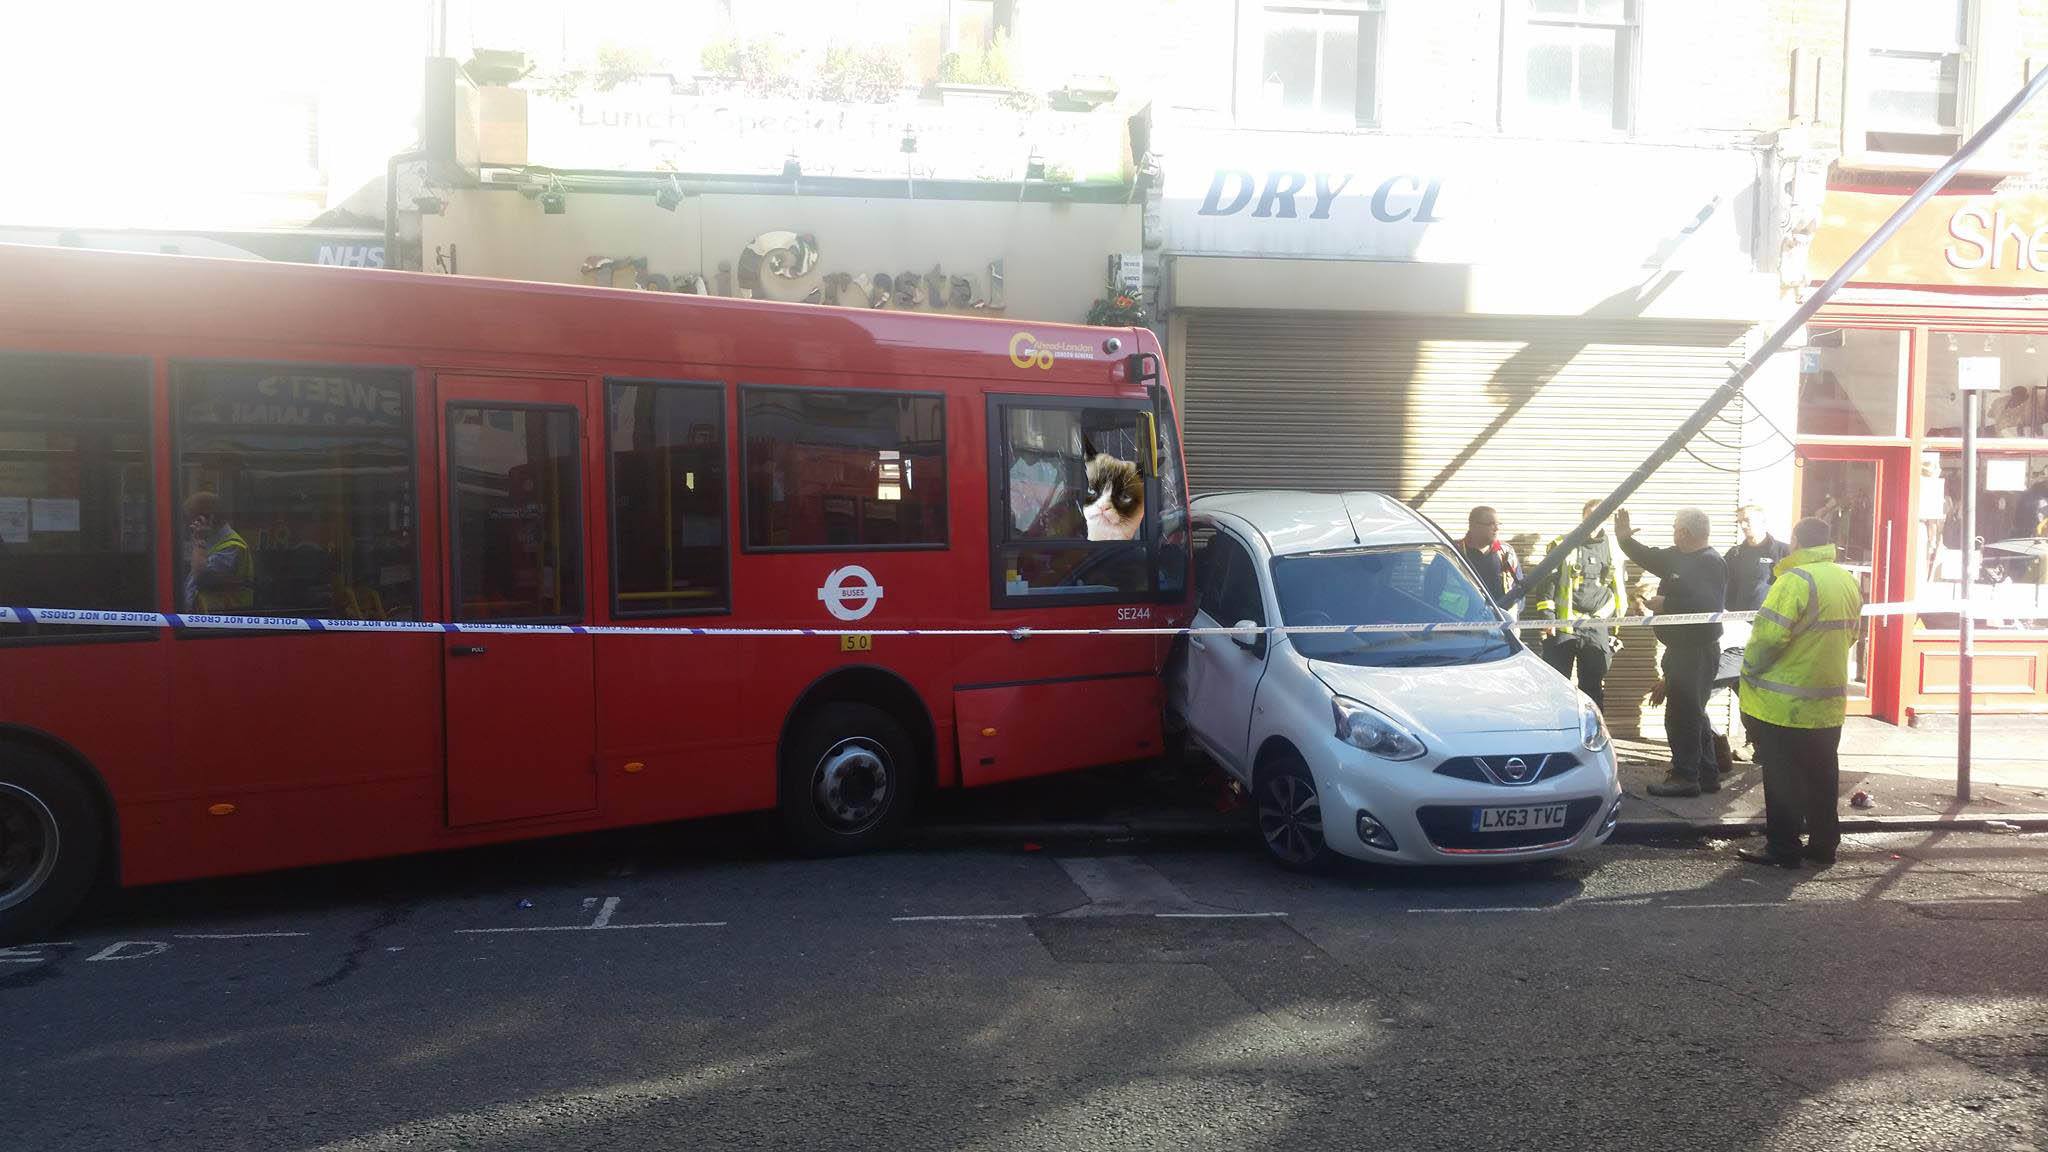 Bus crashes into shop Crystal Palace